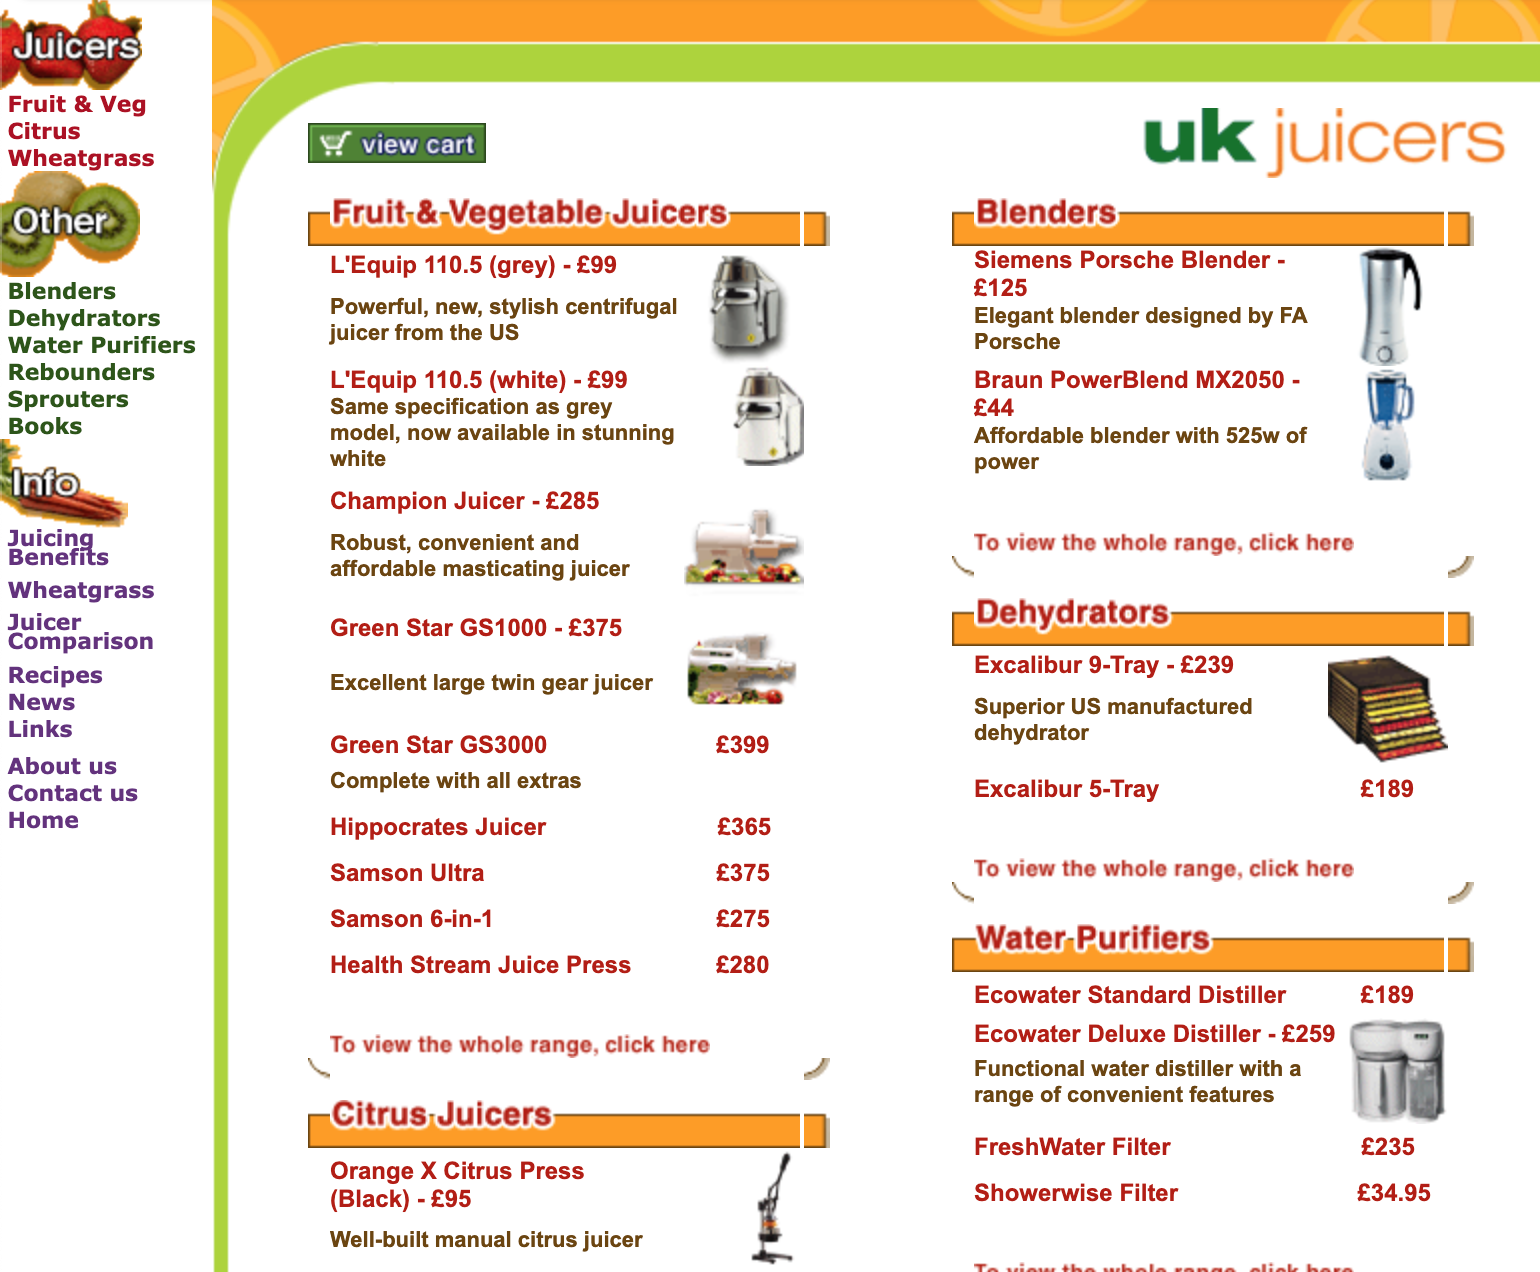 UK Juicers Website, 2002